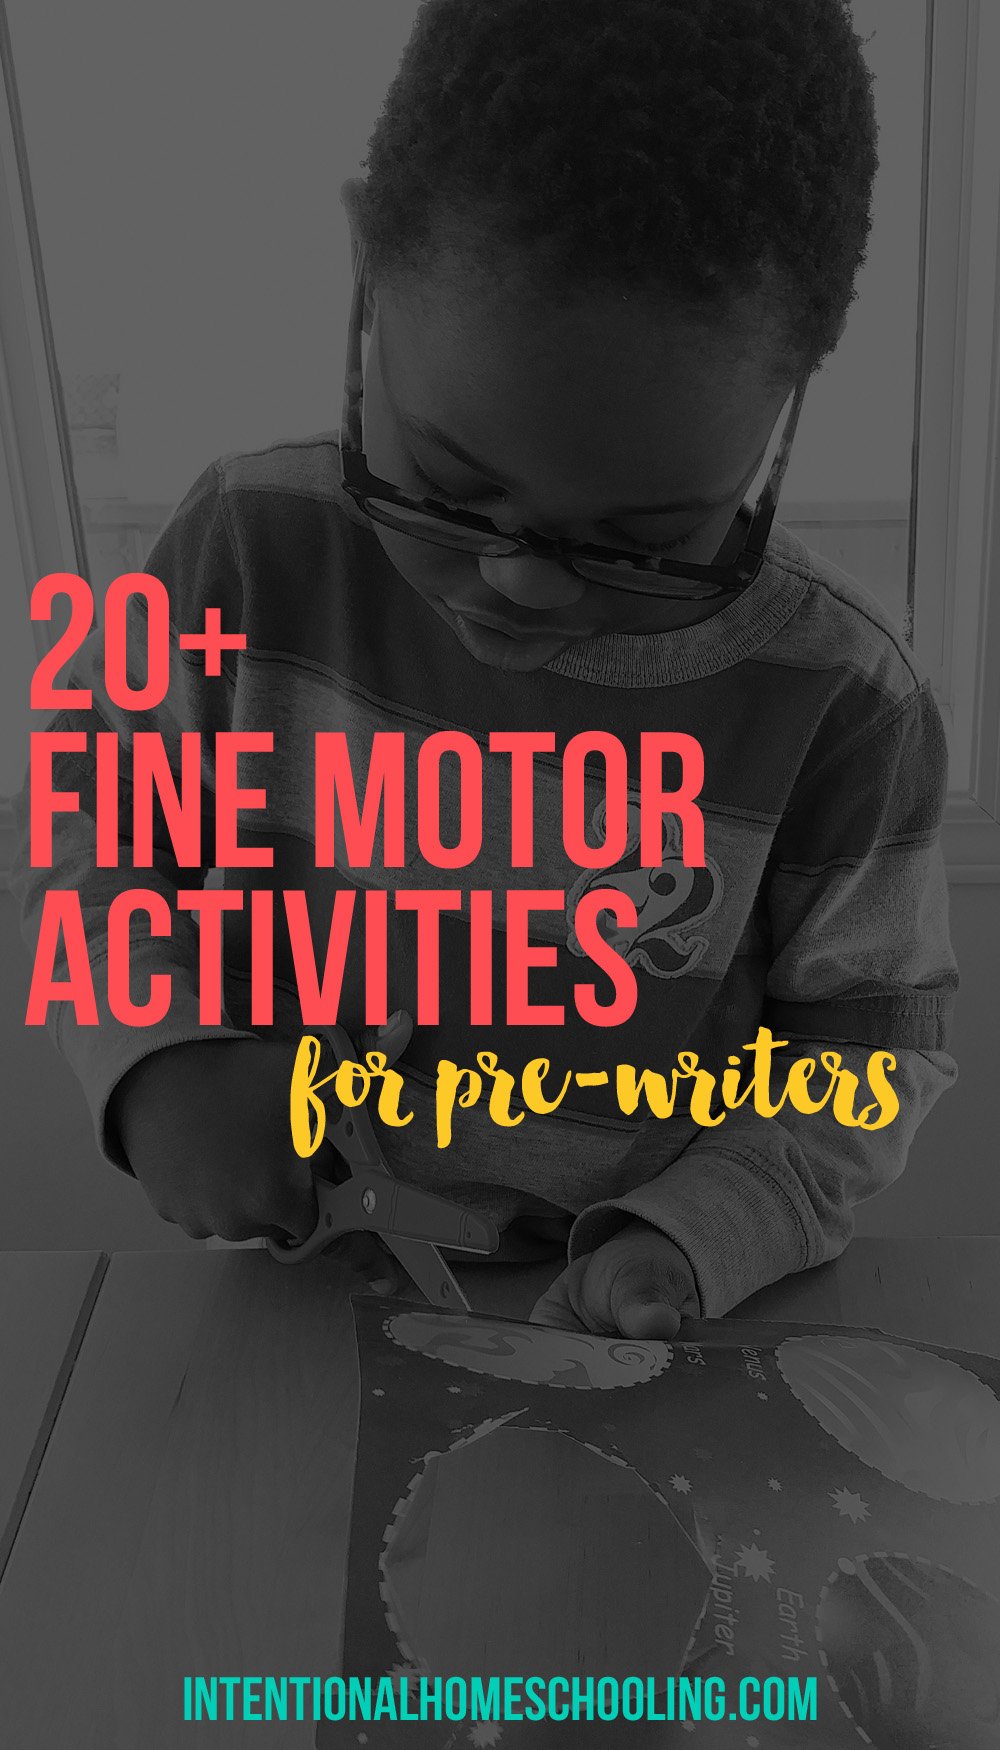 Activities for Fine Motor Development for Preschoolers and Pre-Writers